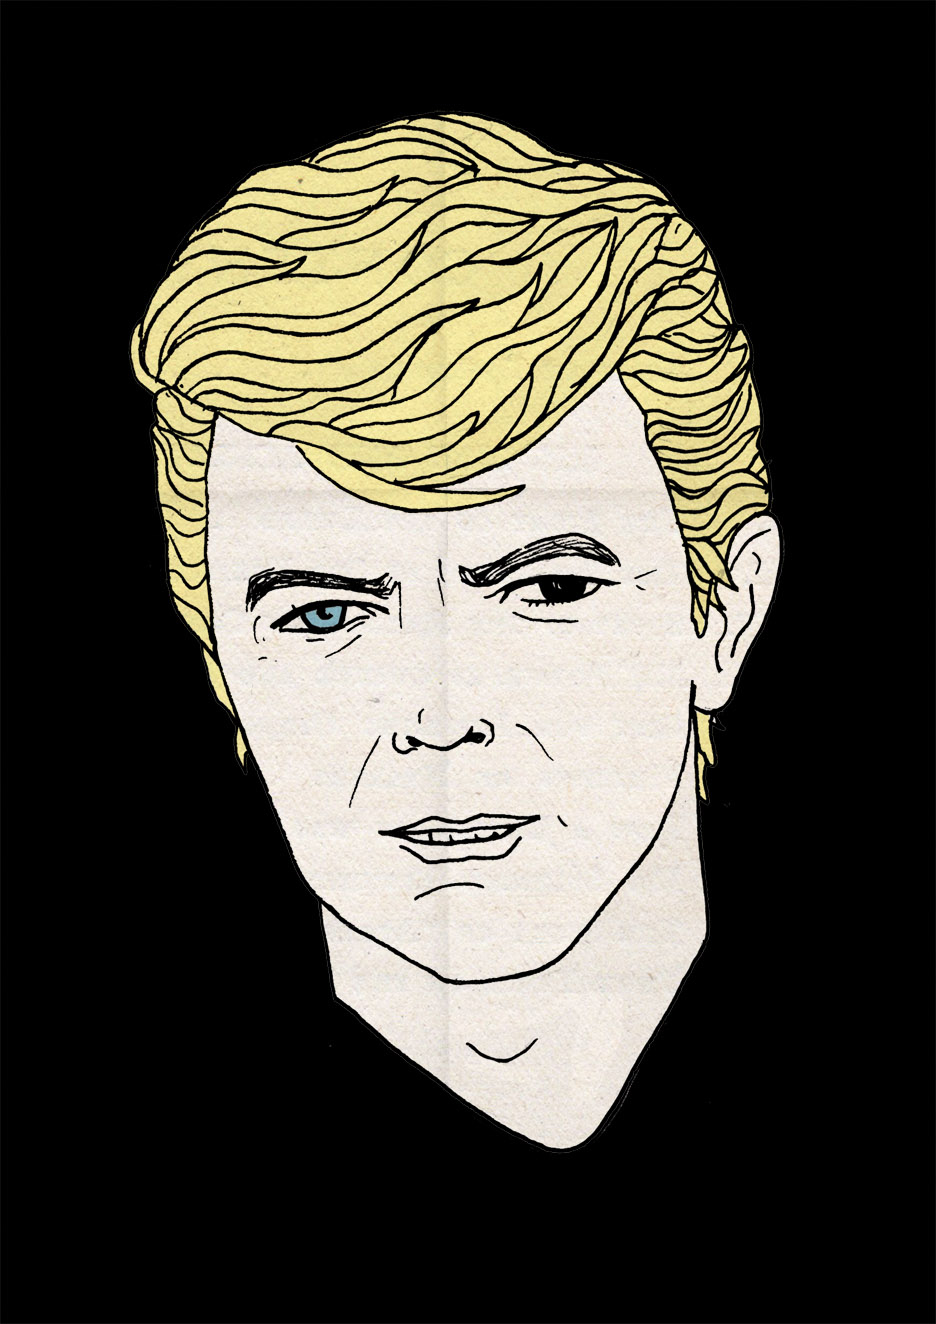 David Bowie illustration by Rich Fairhead